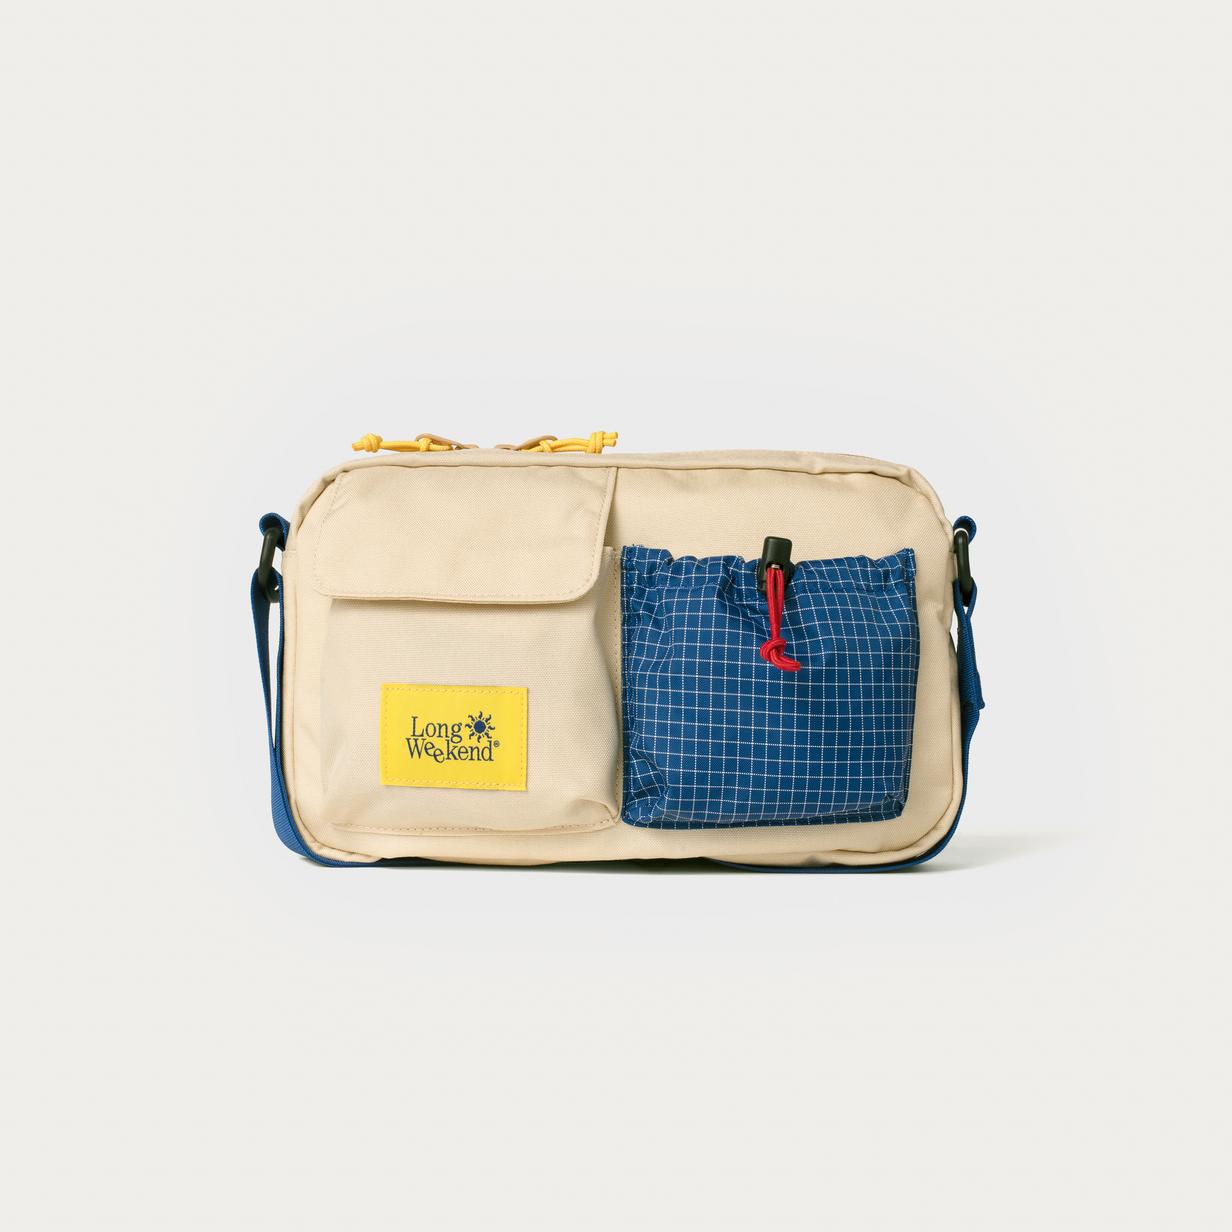 Long Weekend Santa Fe Shoulder Bag - Creme Multi (213-006)